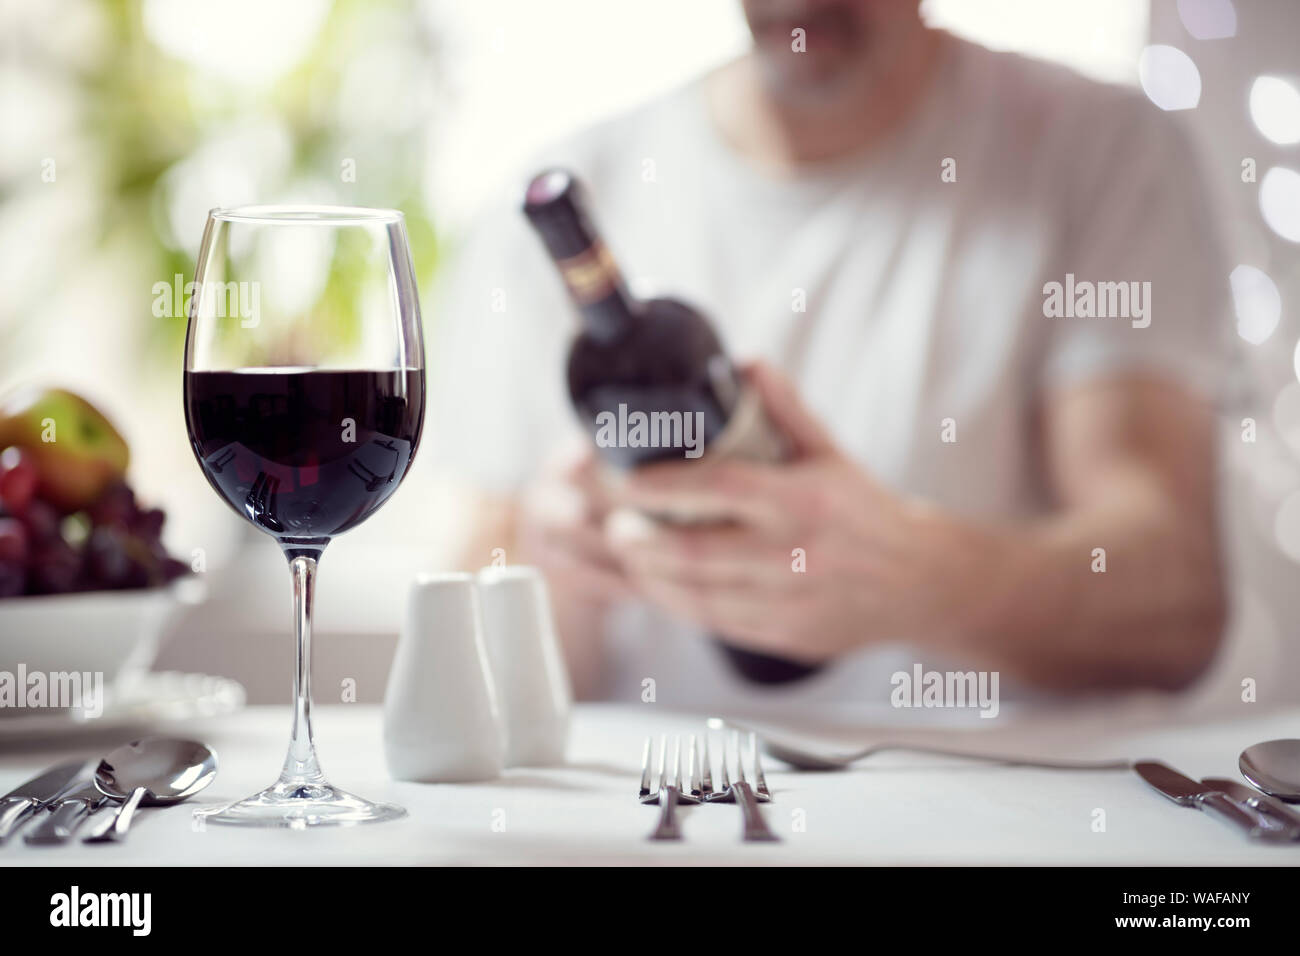 Man reading red wine bottle label in restaurant focus on glass Stock Photo